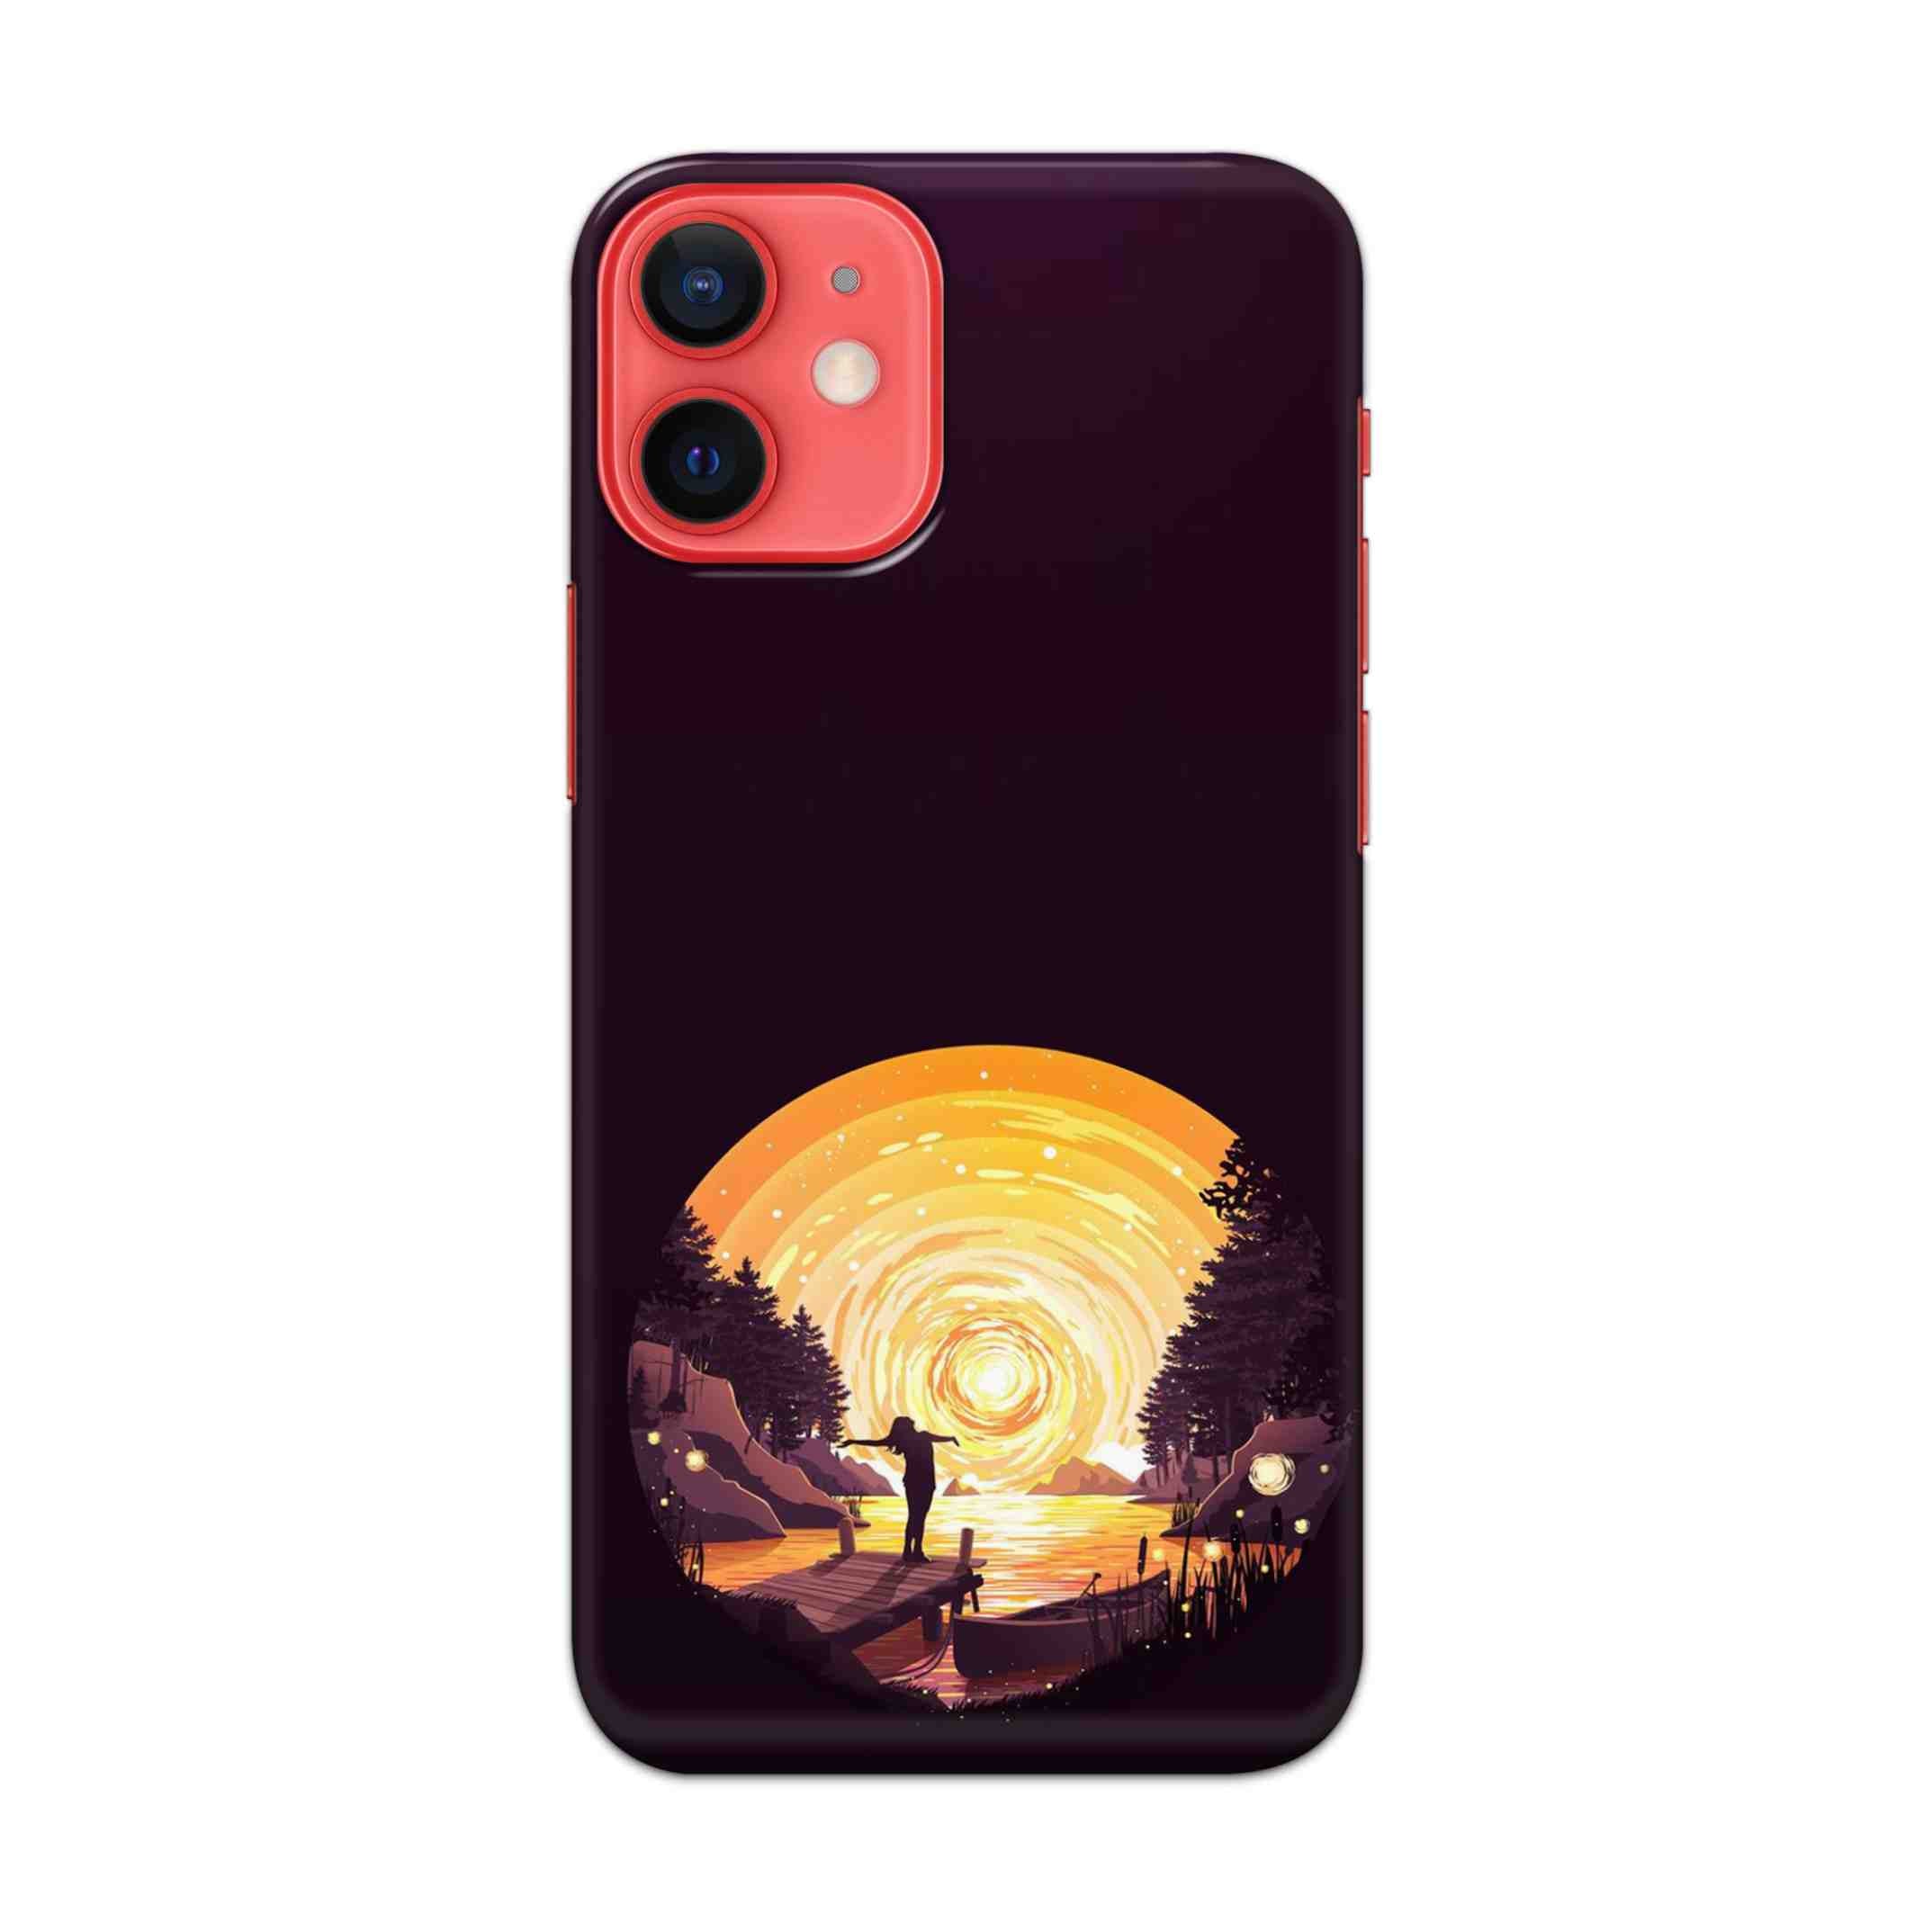 Buy Night Sunrise Hard Back Mobile Phone Case/Cover For Apple iPhone 12 mini Online